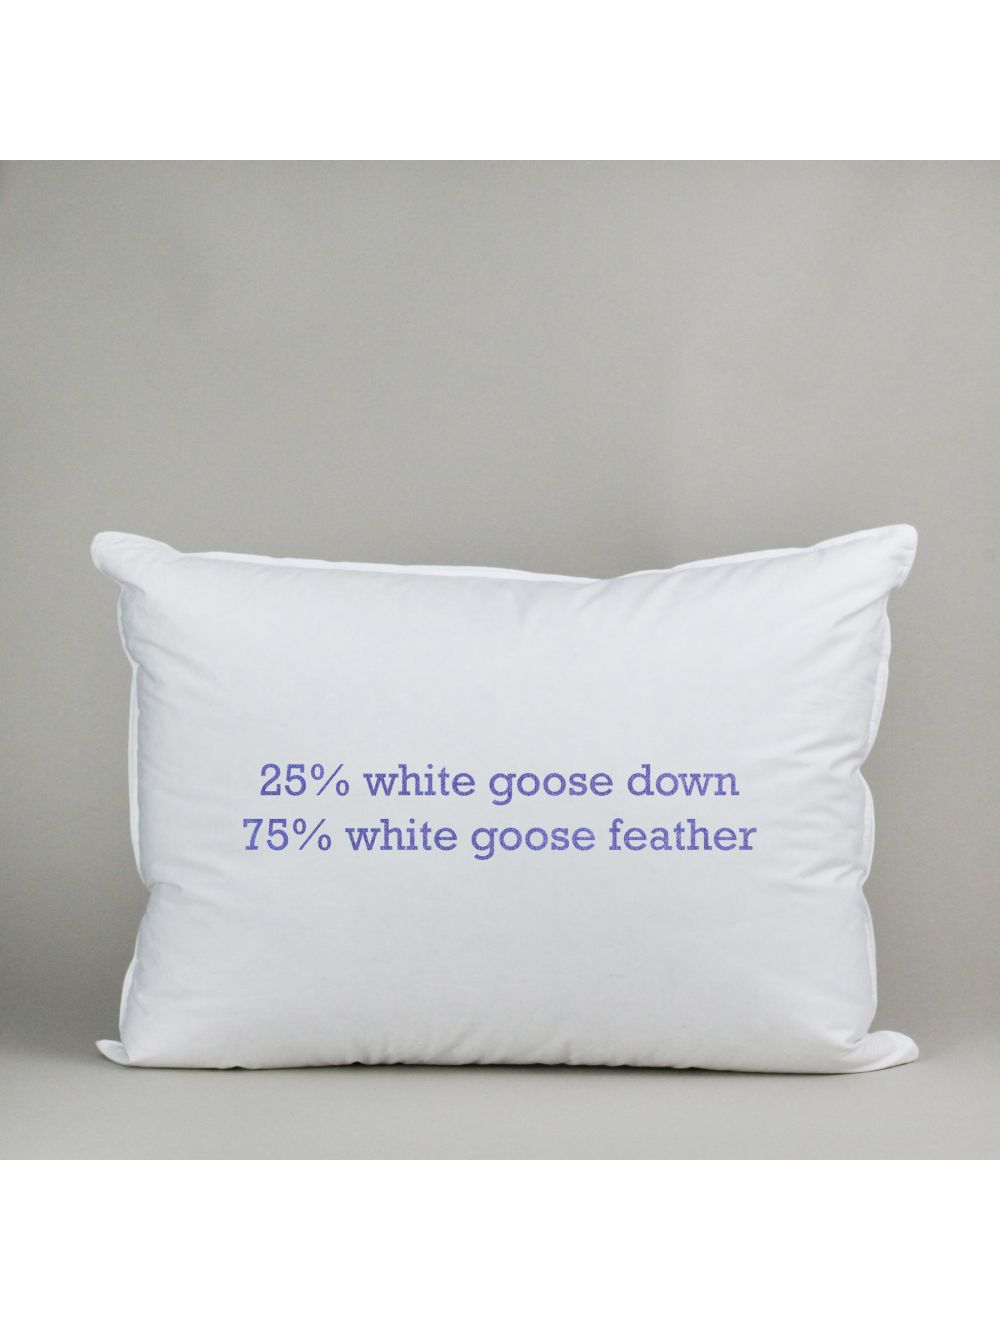 Cal-a-Vie Guest Pillows 25/75 Blend